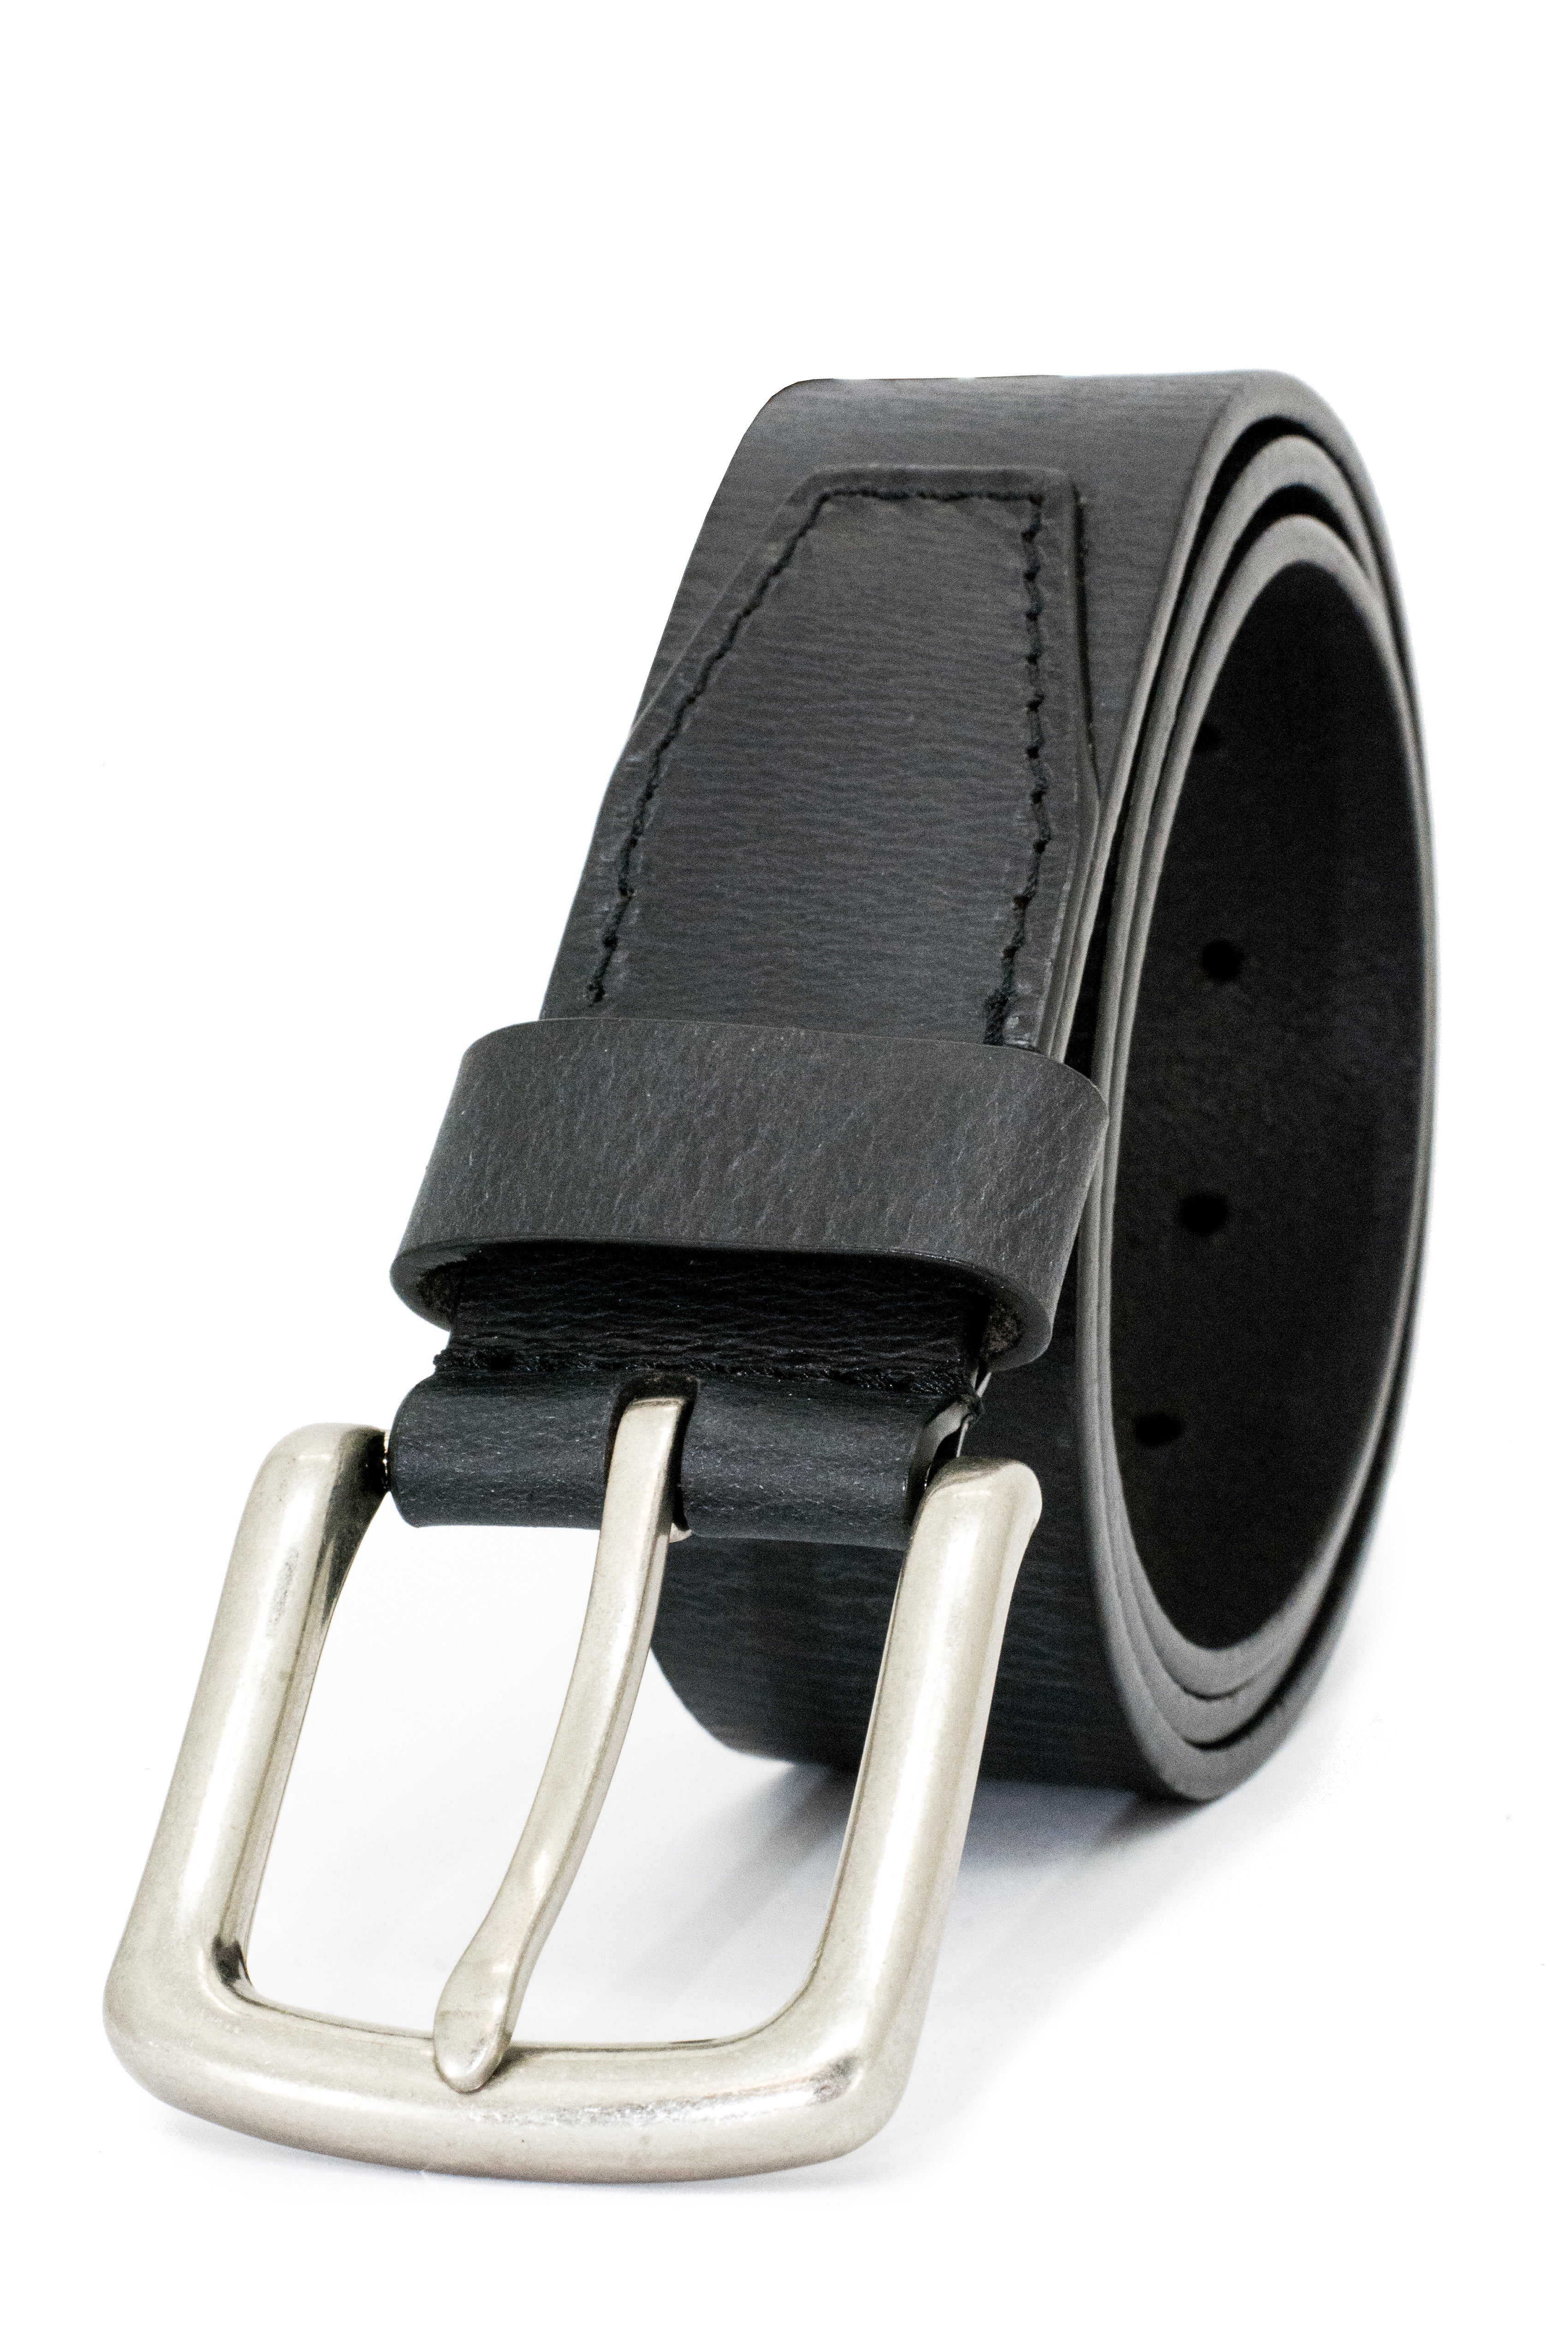 Ranger Style Belt (12pc case)